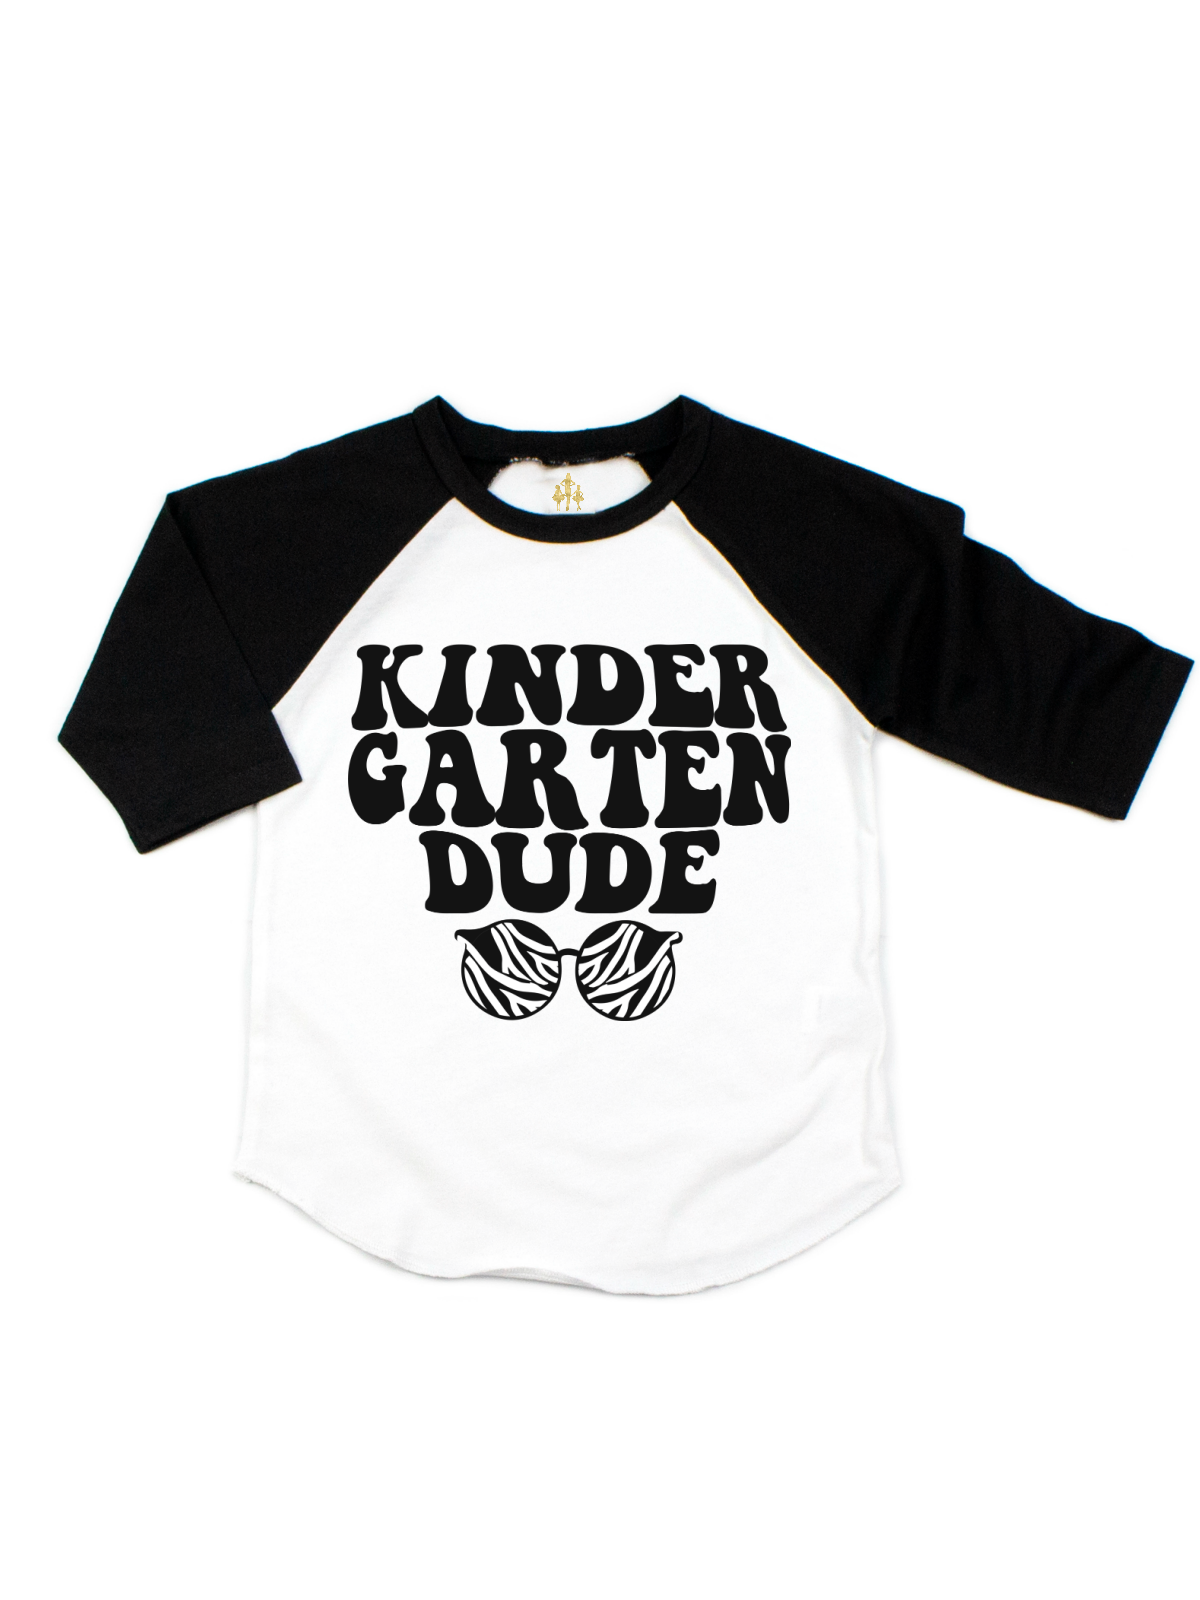 Kindergarten Dude Kids White and Black Raglan T-Shirt